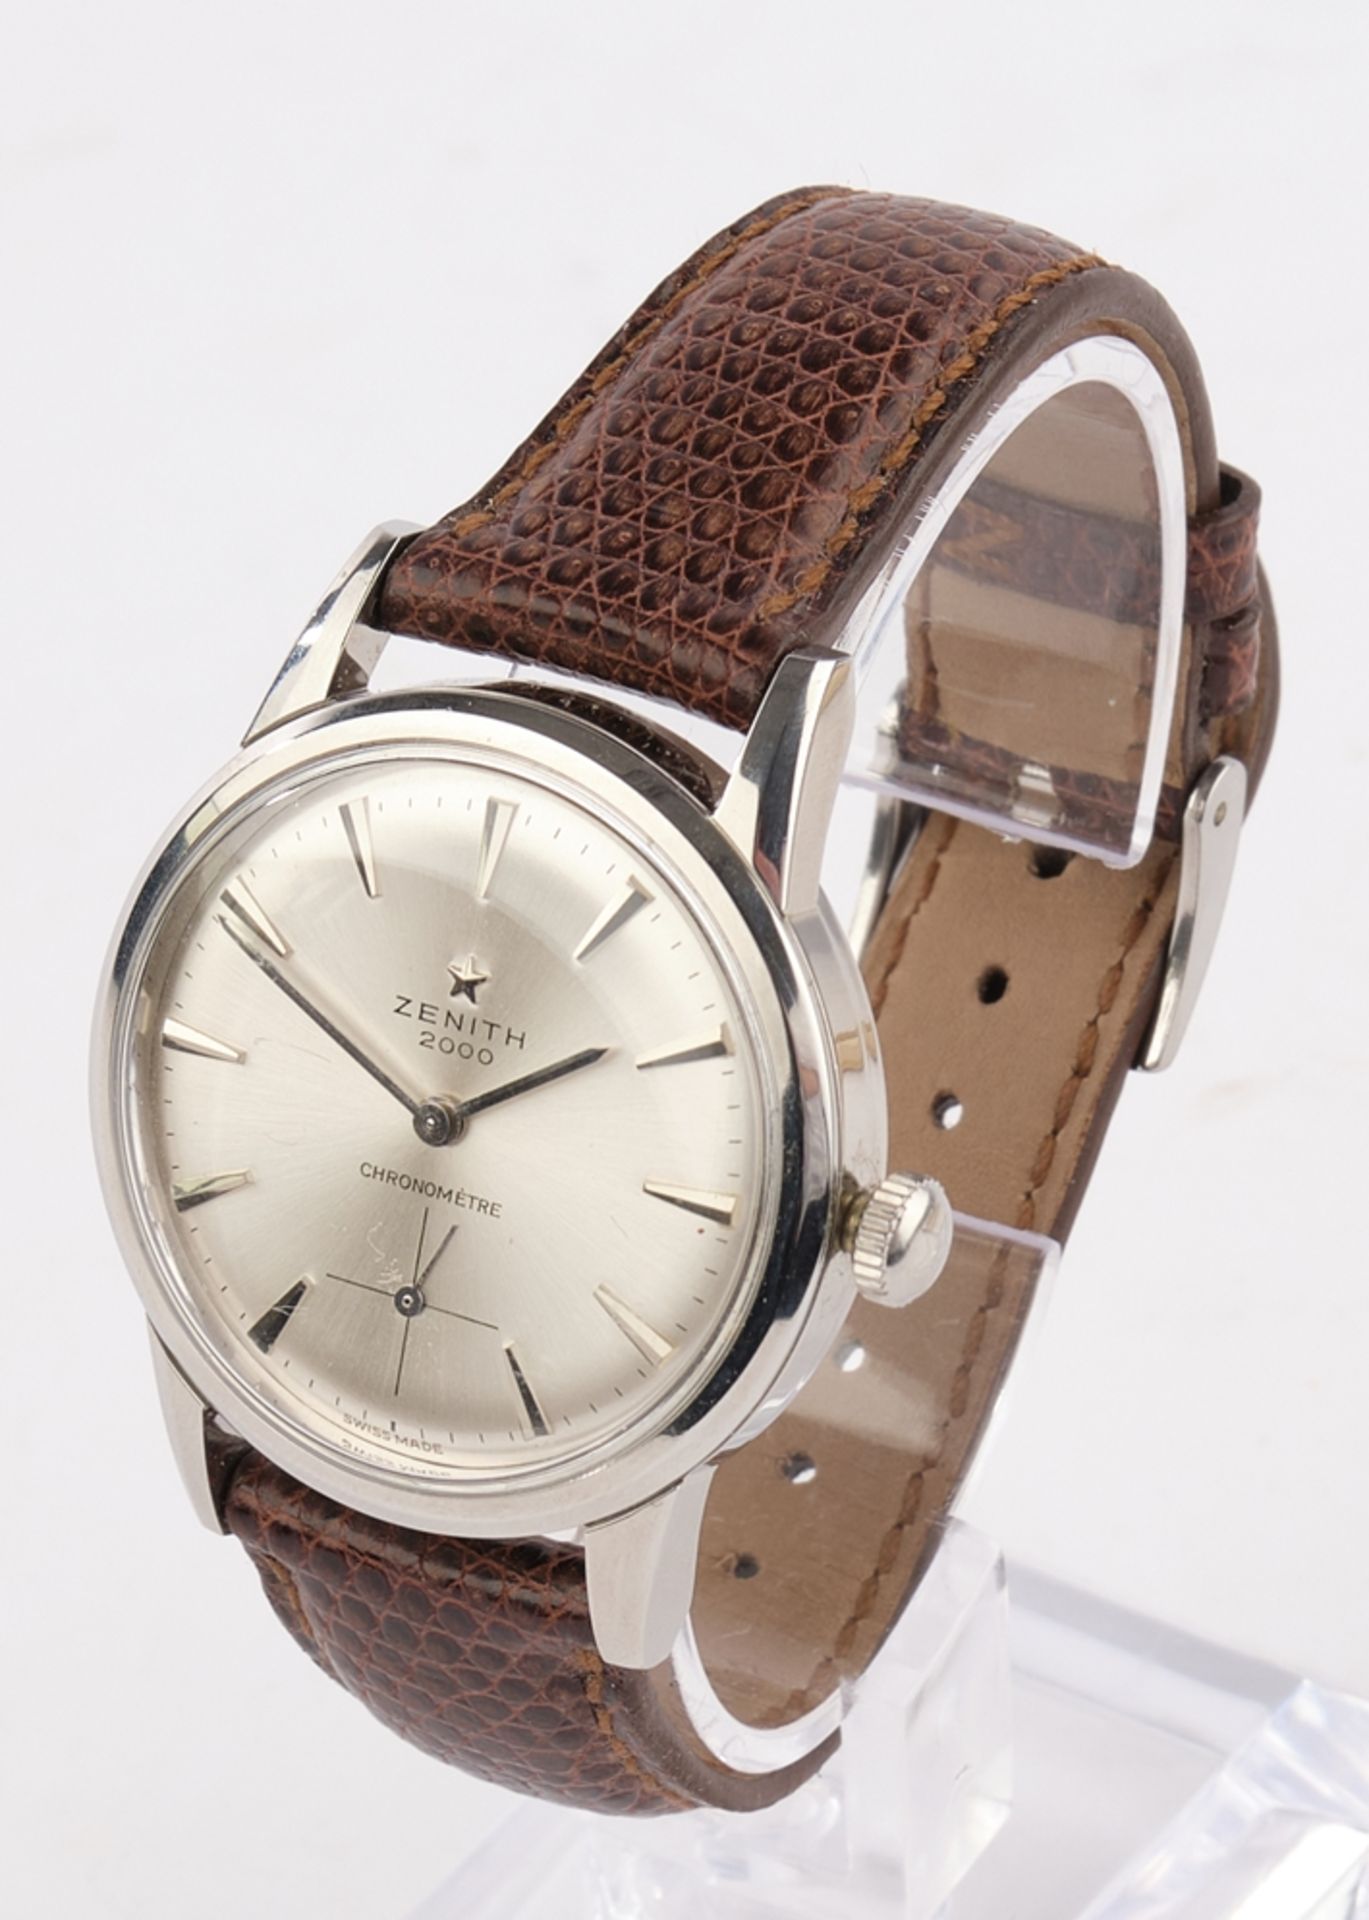 Armbanduhr Zenith 2000 Chronometer, Schweiz, 1960er Jahre, wohl Cal. 135, Handaufzug, neuwertiges b - Image 4 of 7